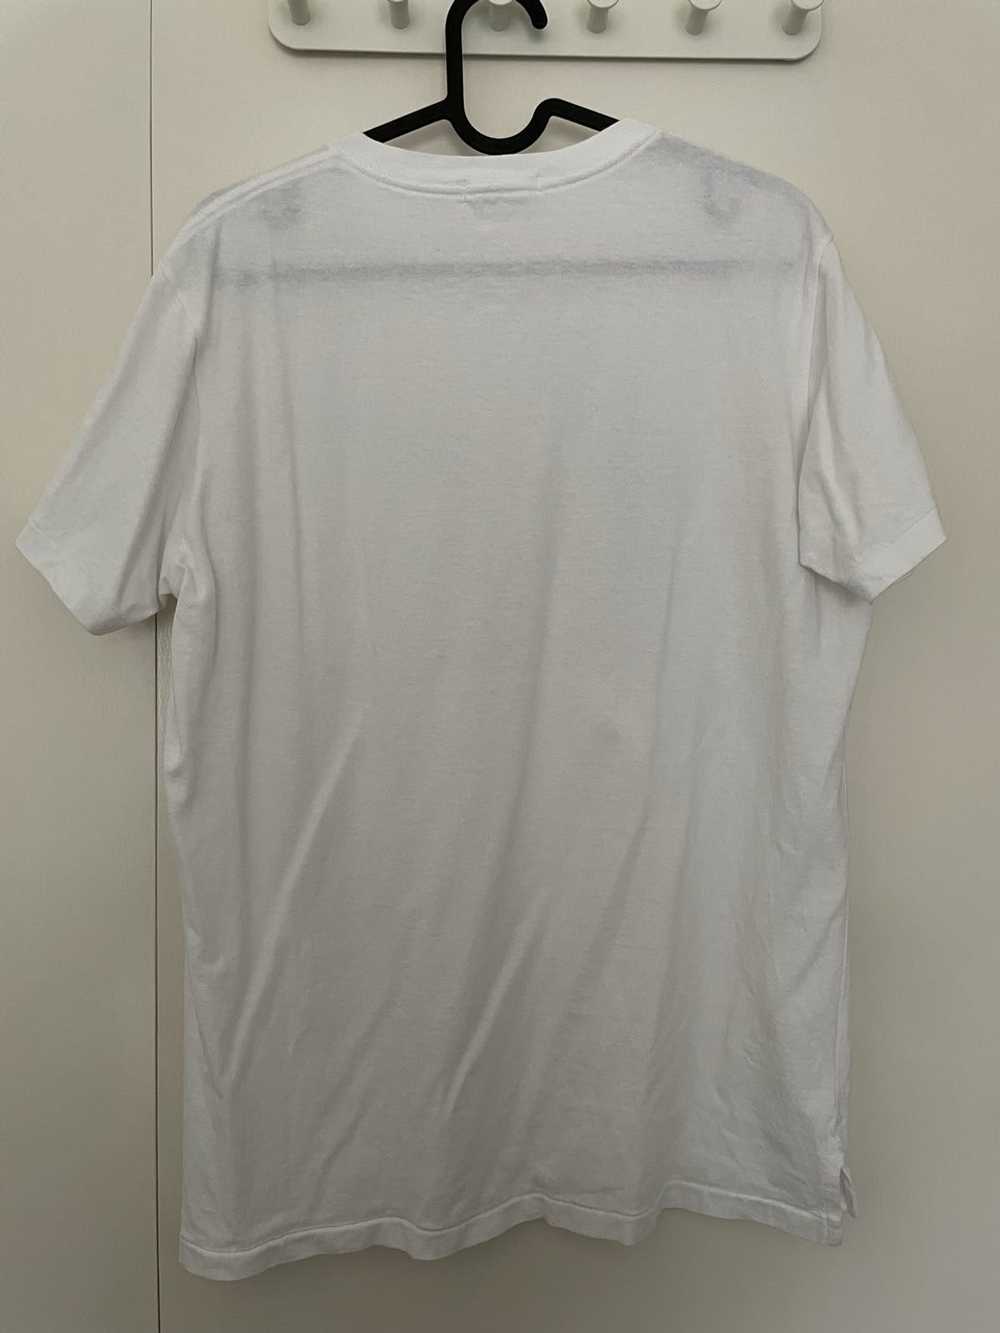 Engineered Garments SS15 Peacock T-Shirt - image 2